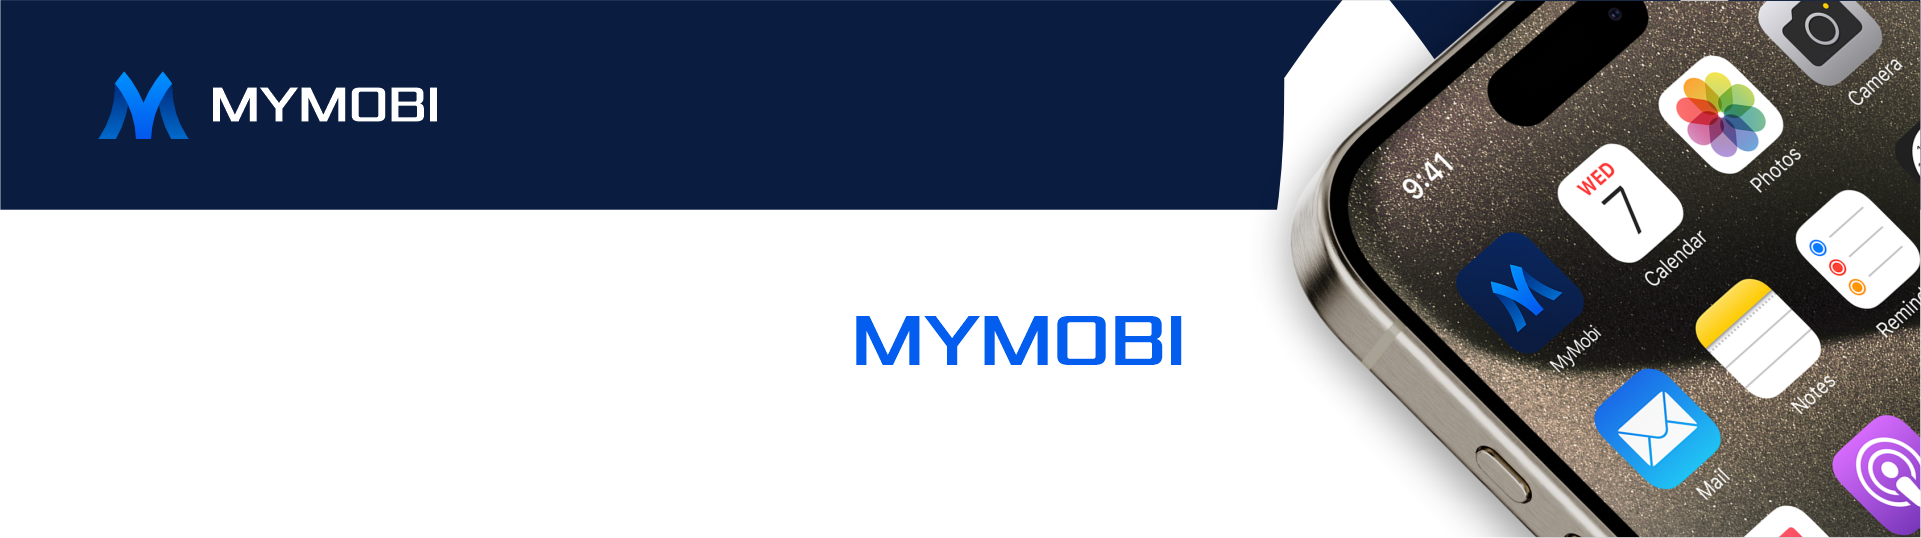 MyMobi Header